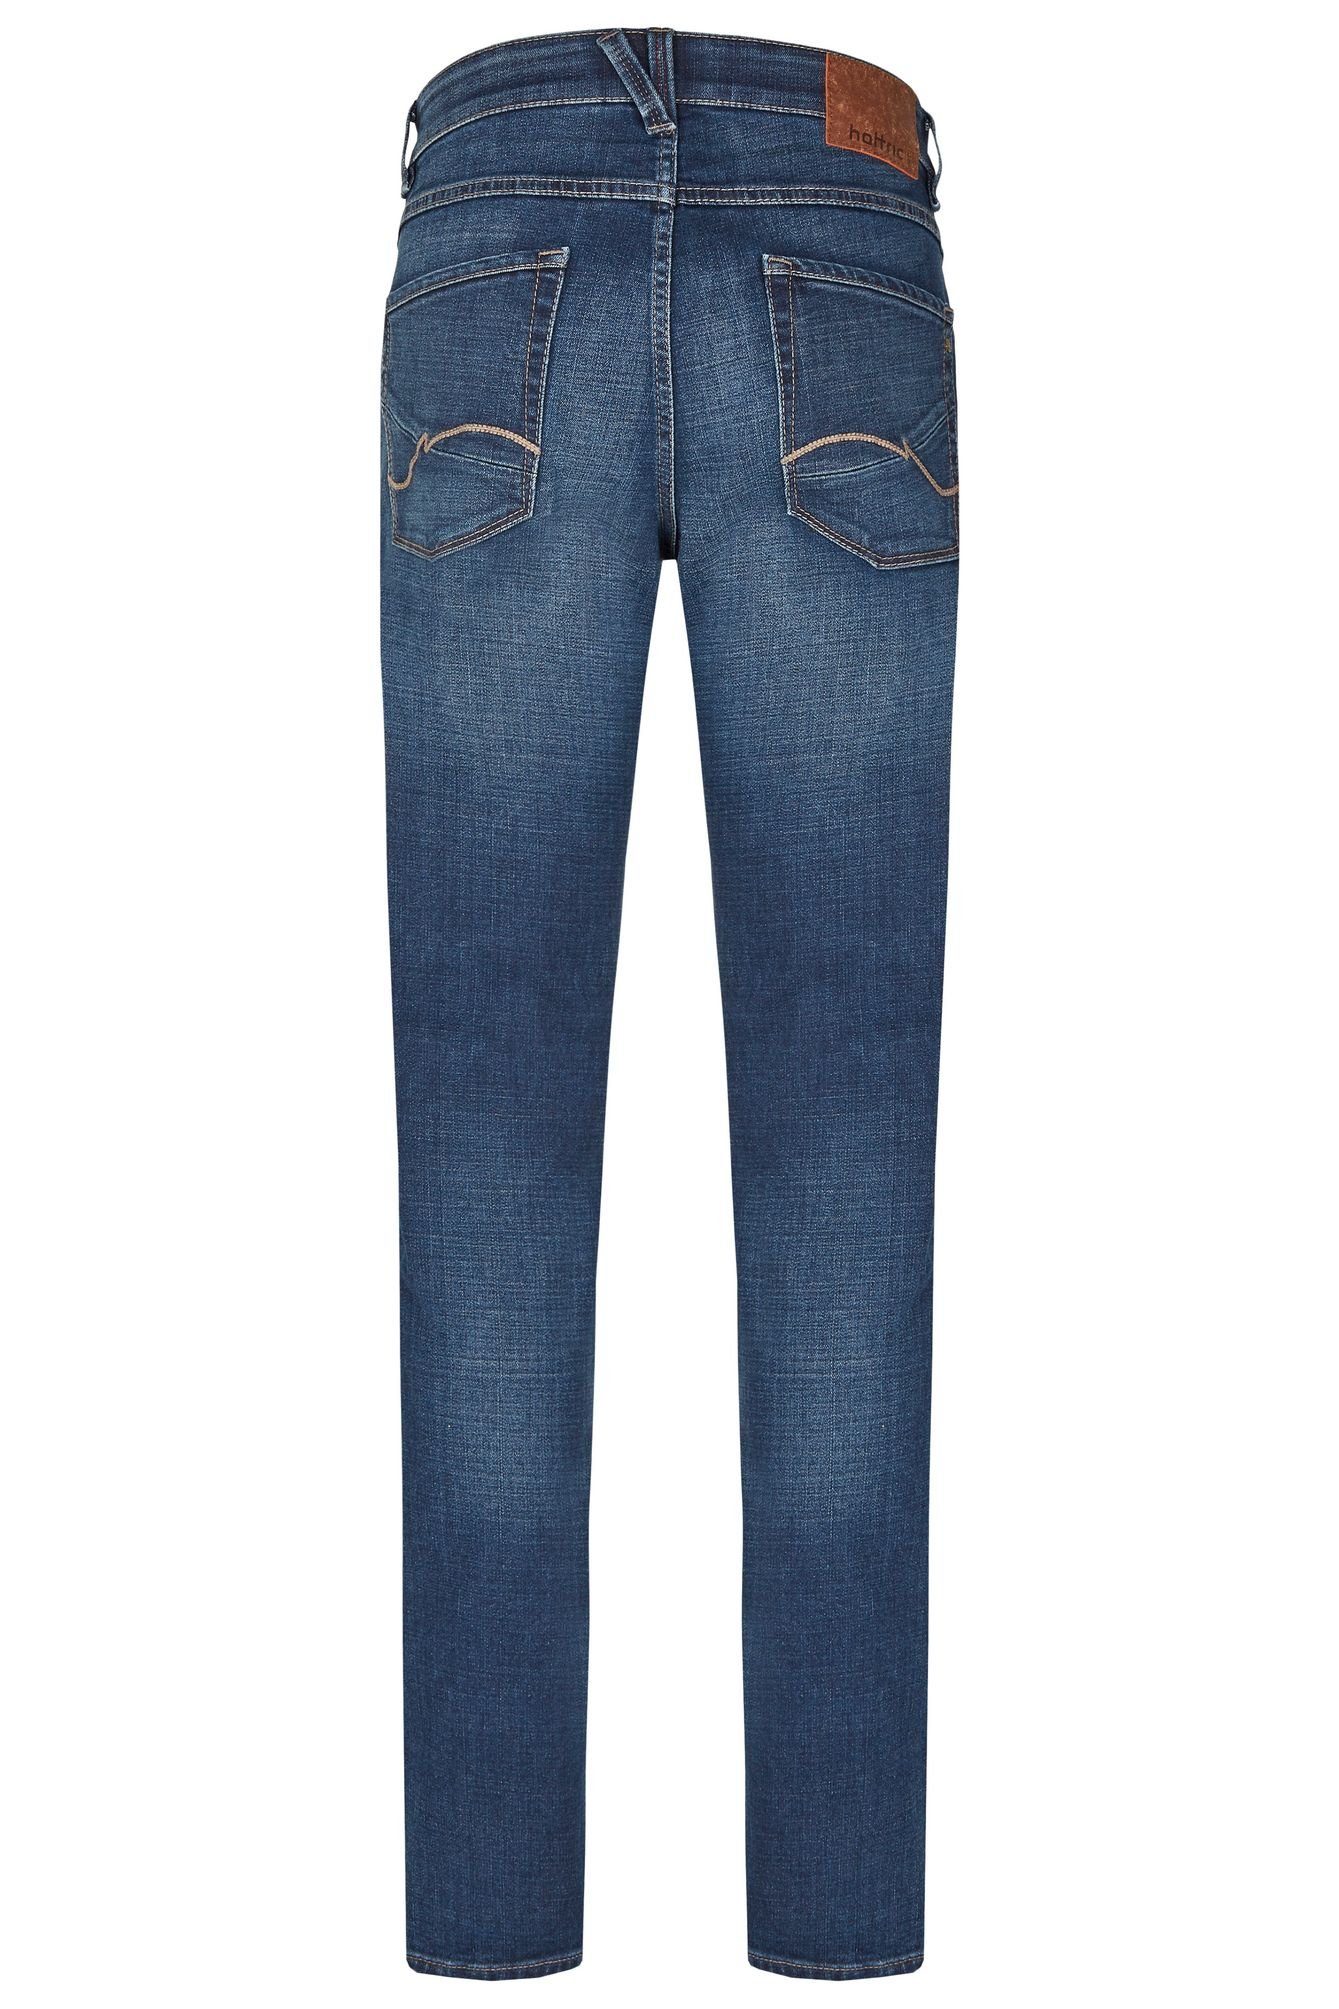 (42) 5-Pocket-Jeans 688495-9690 Hattric blue